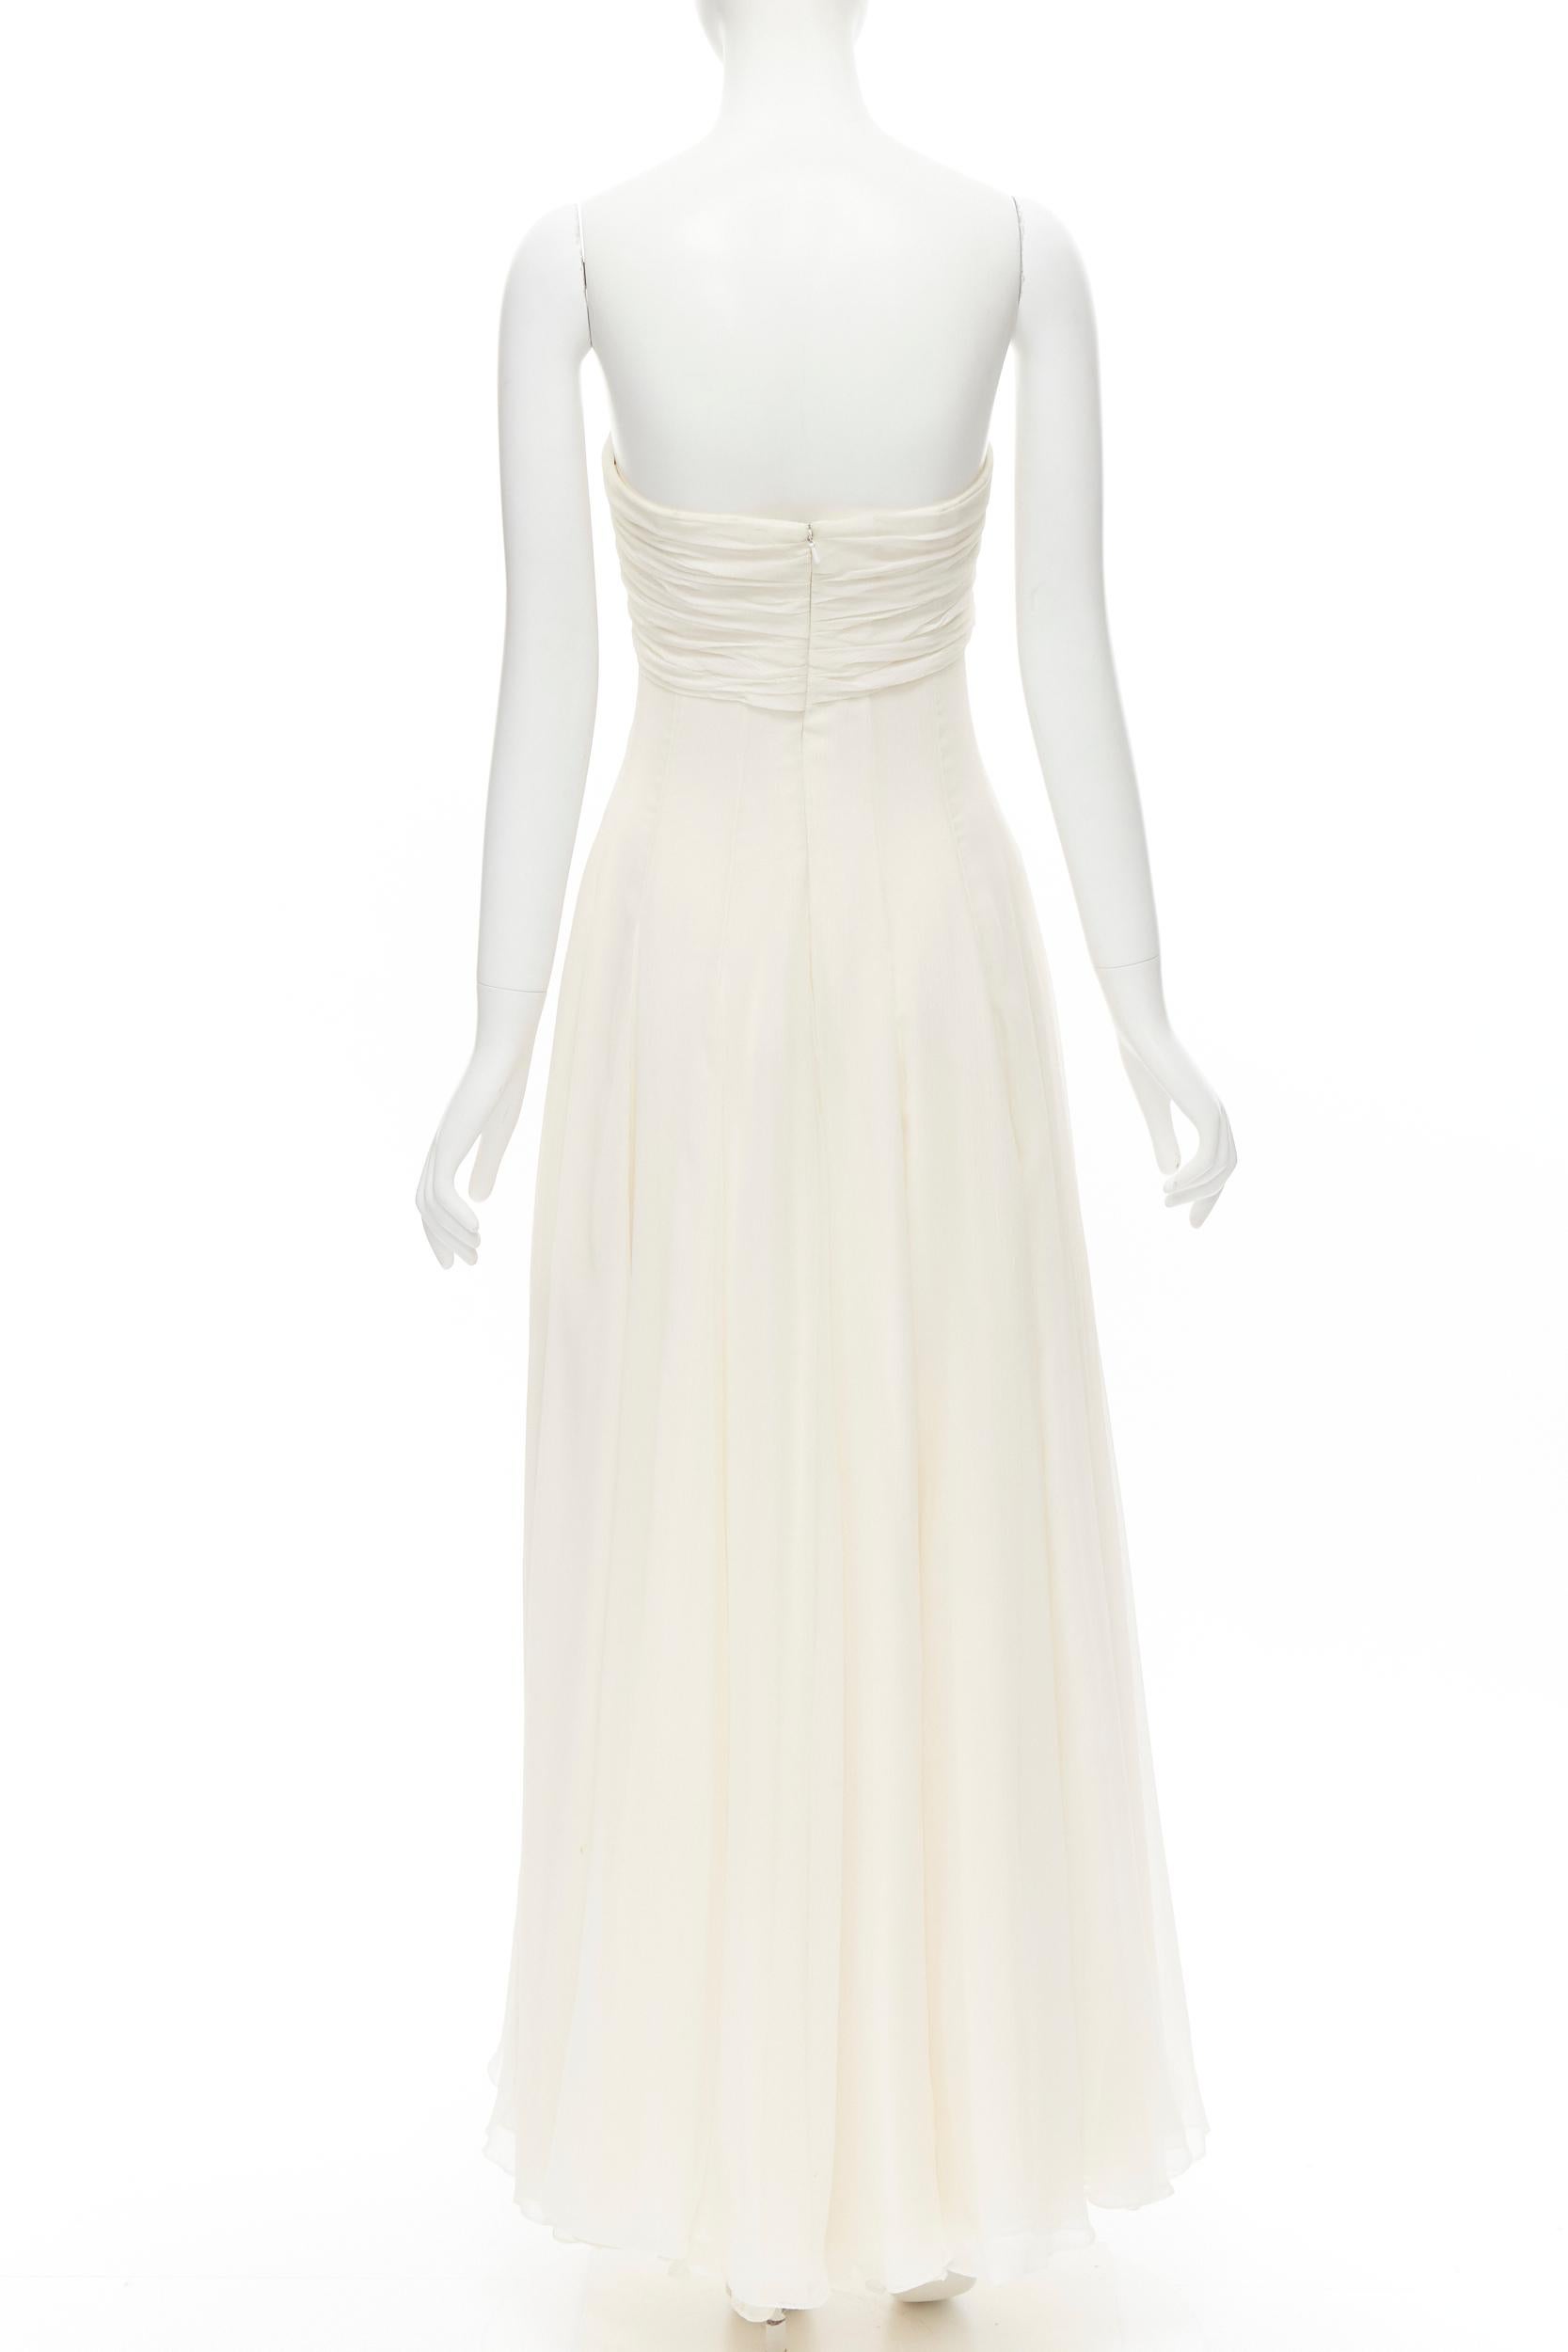 White OSCAR DE LA RENTA ivory white boned corset strapless evening gown dress US0 XS